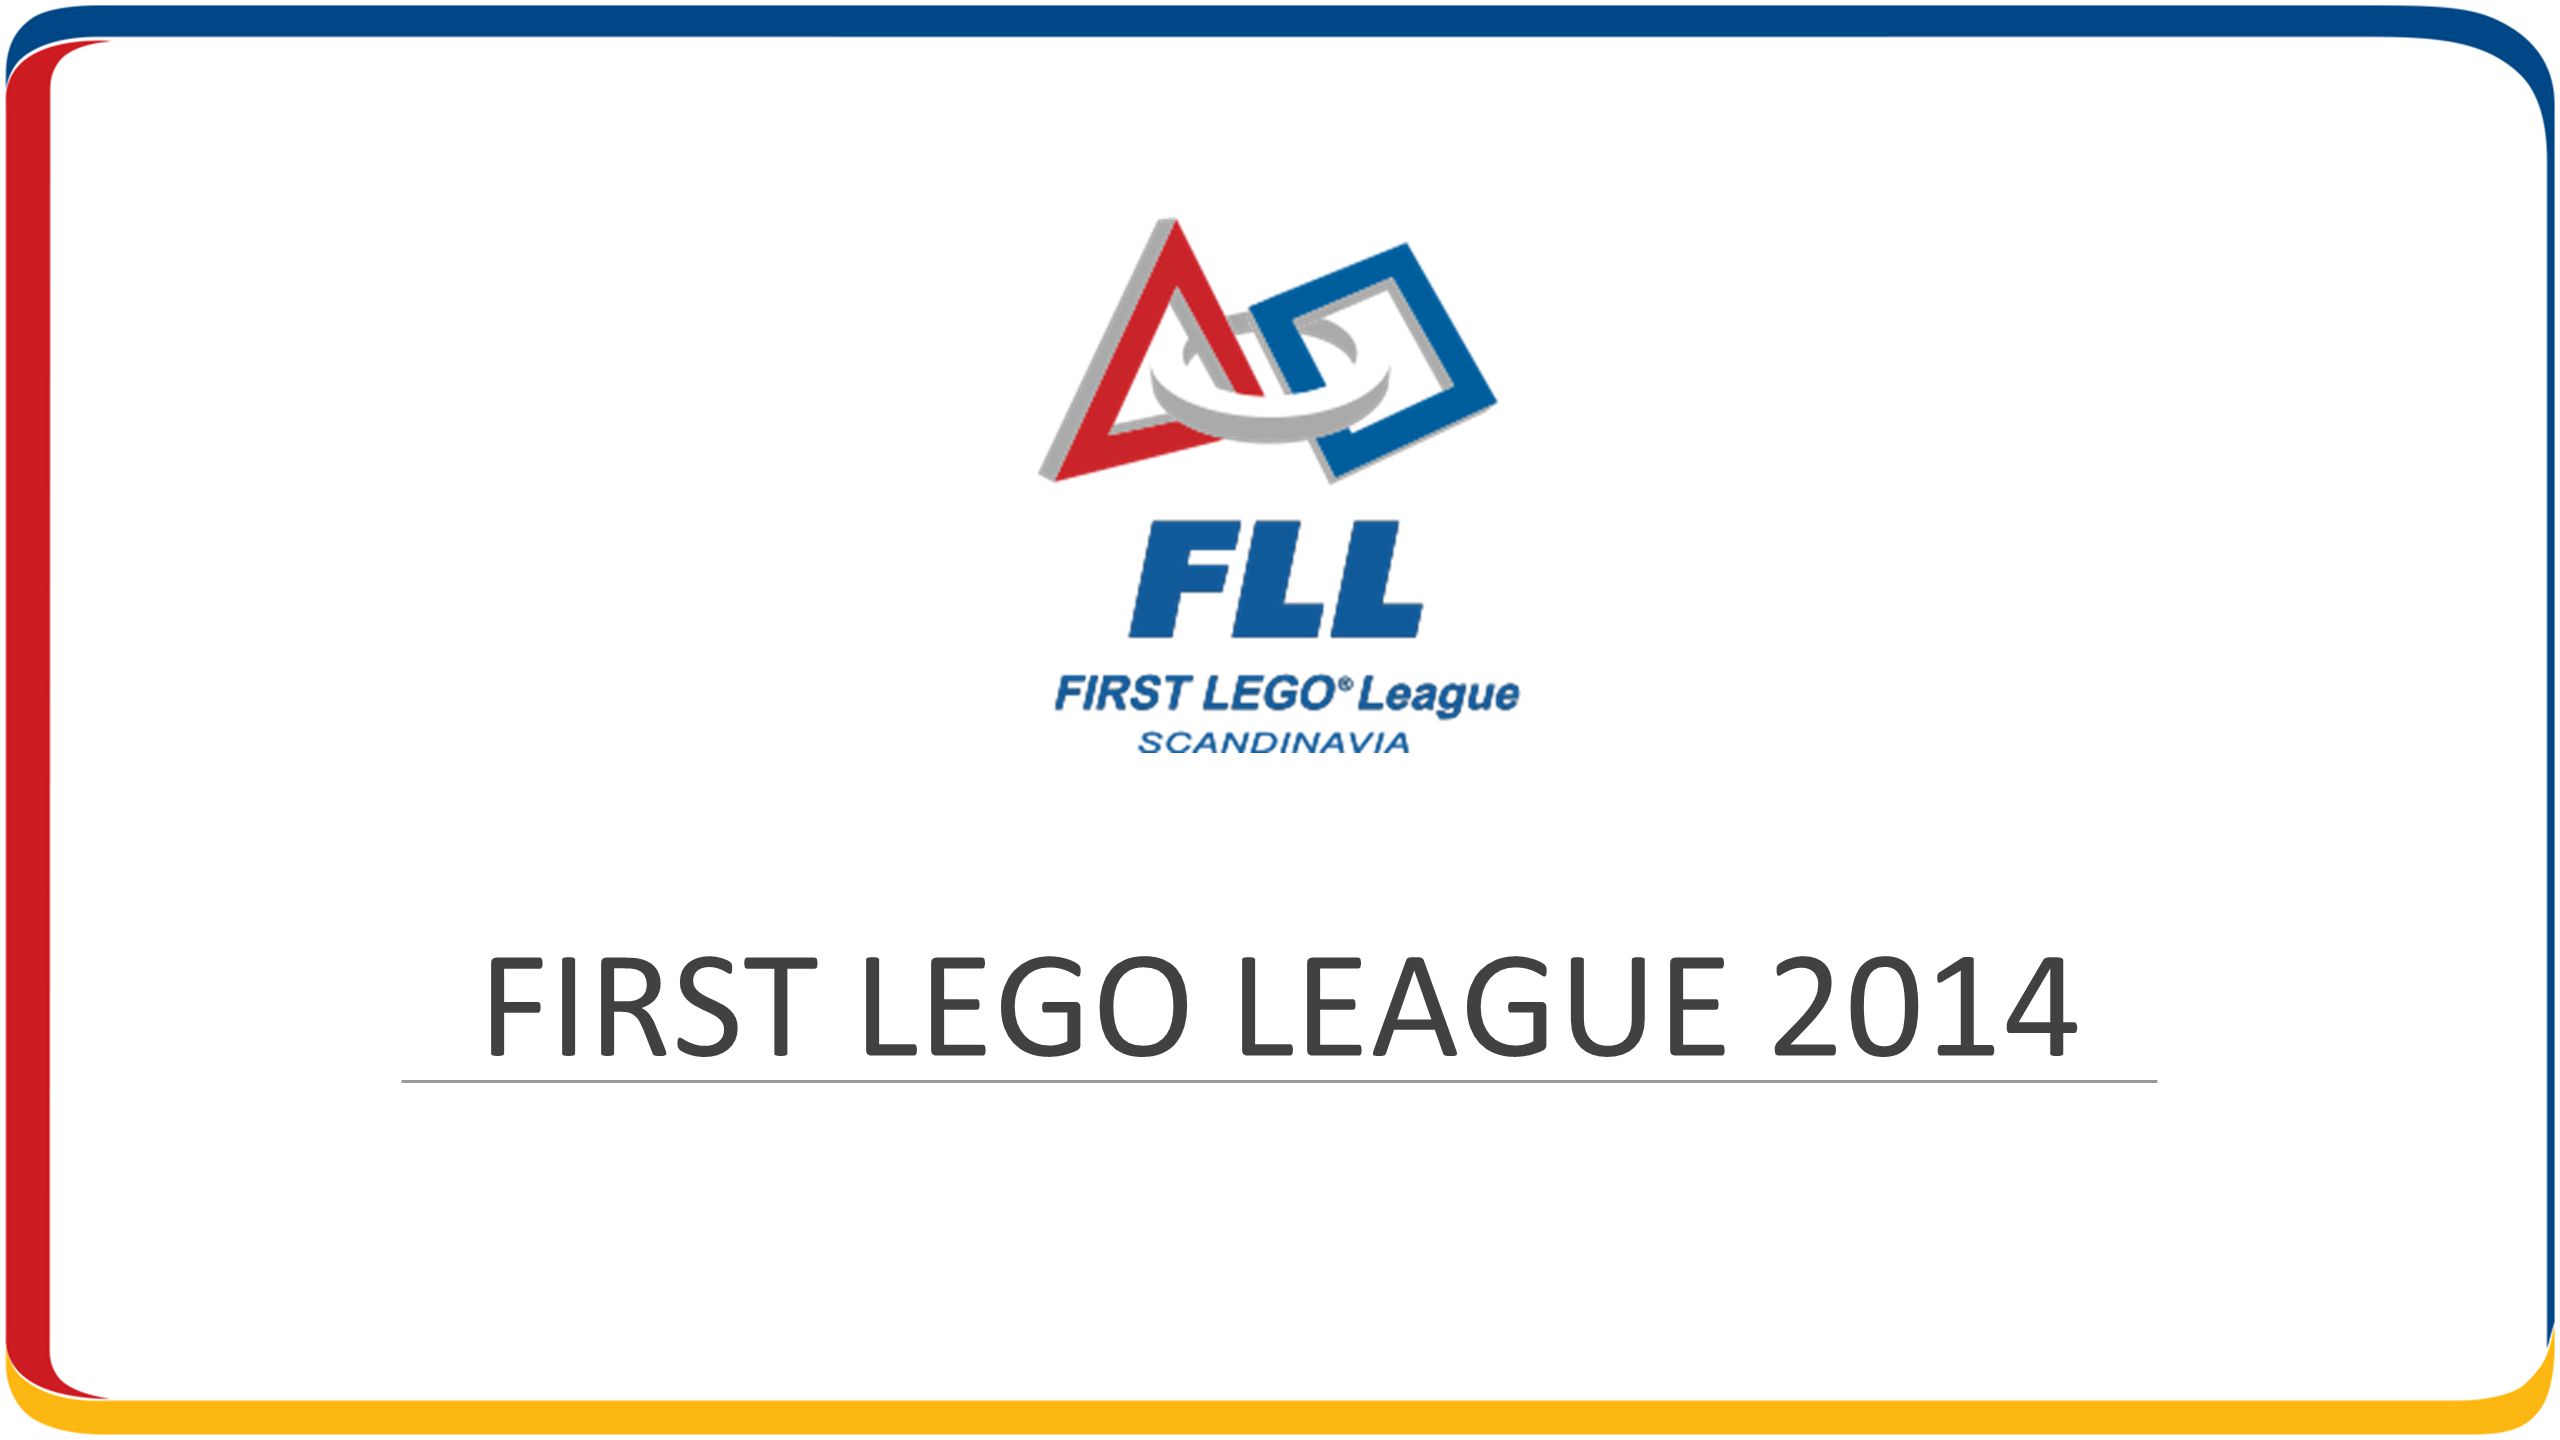 FIRST LEGO LEAGUE 2014